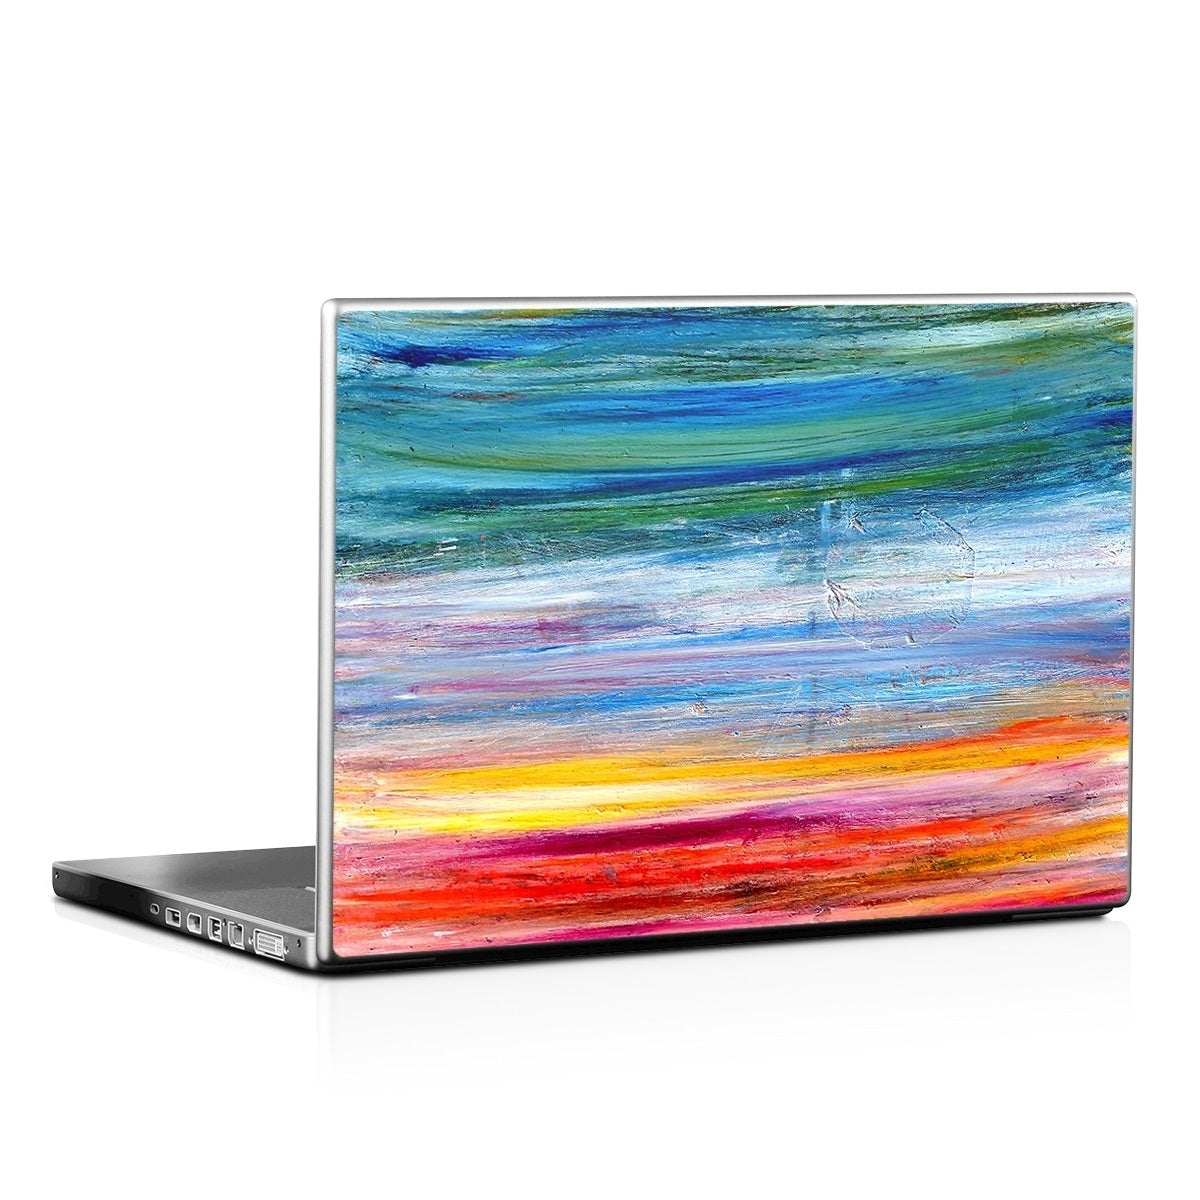 Waterfall - Laptop Lid Skin